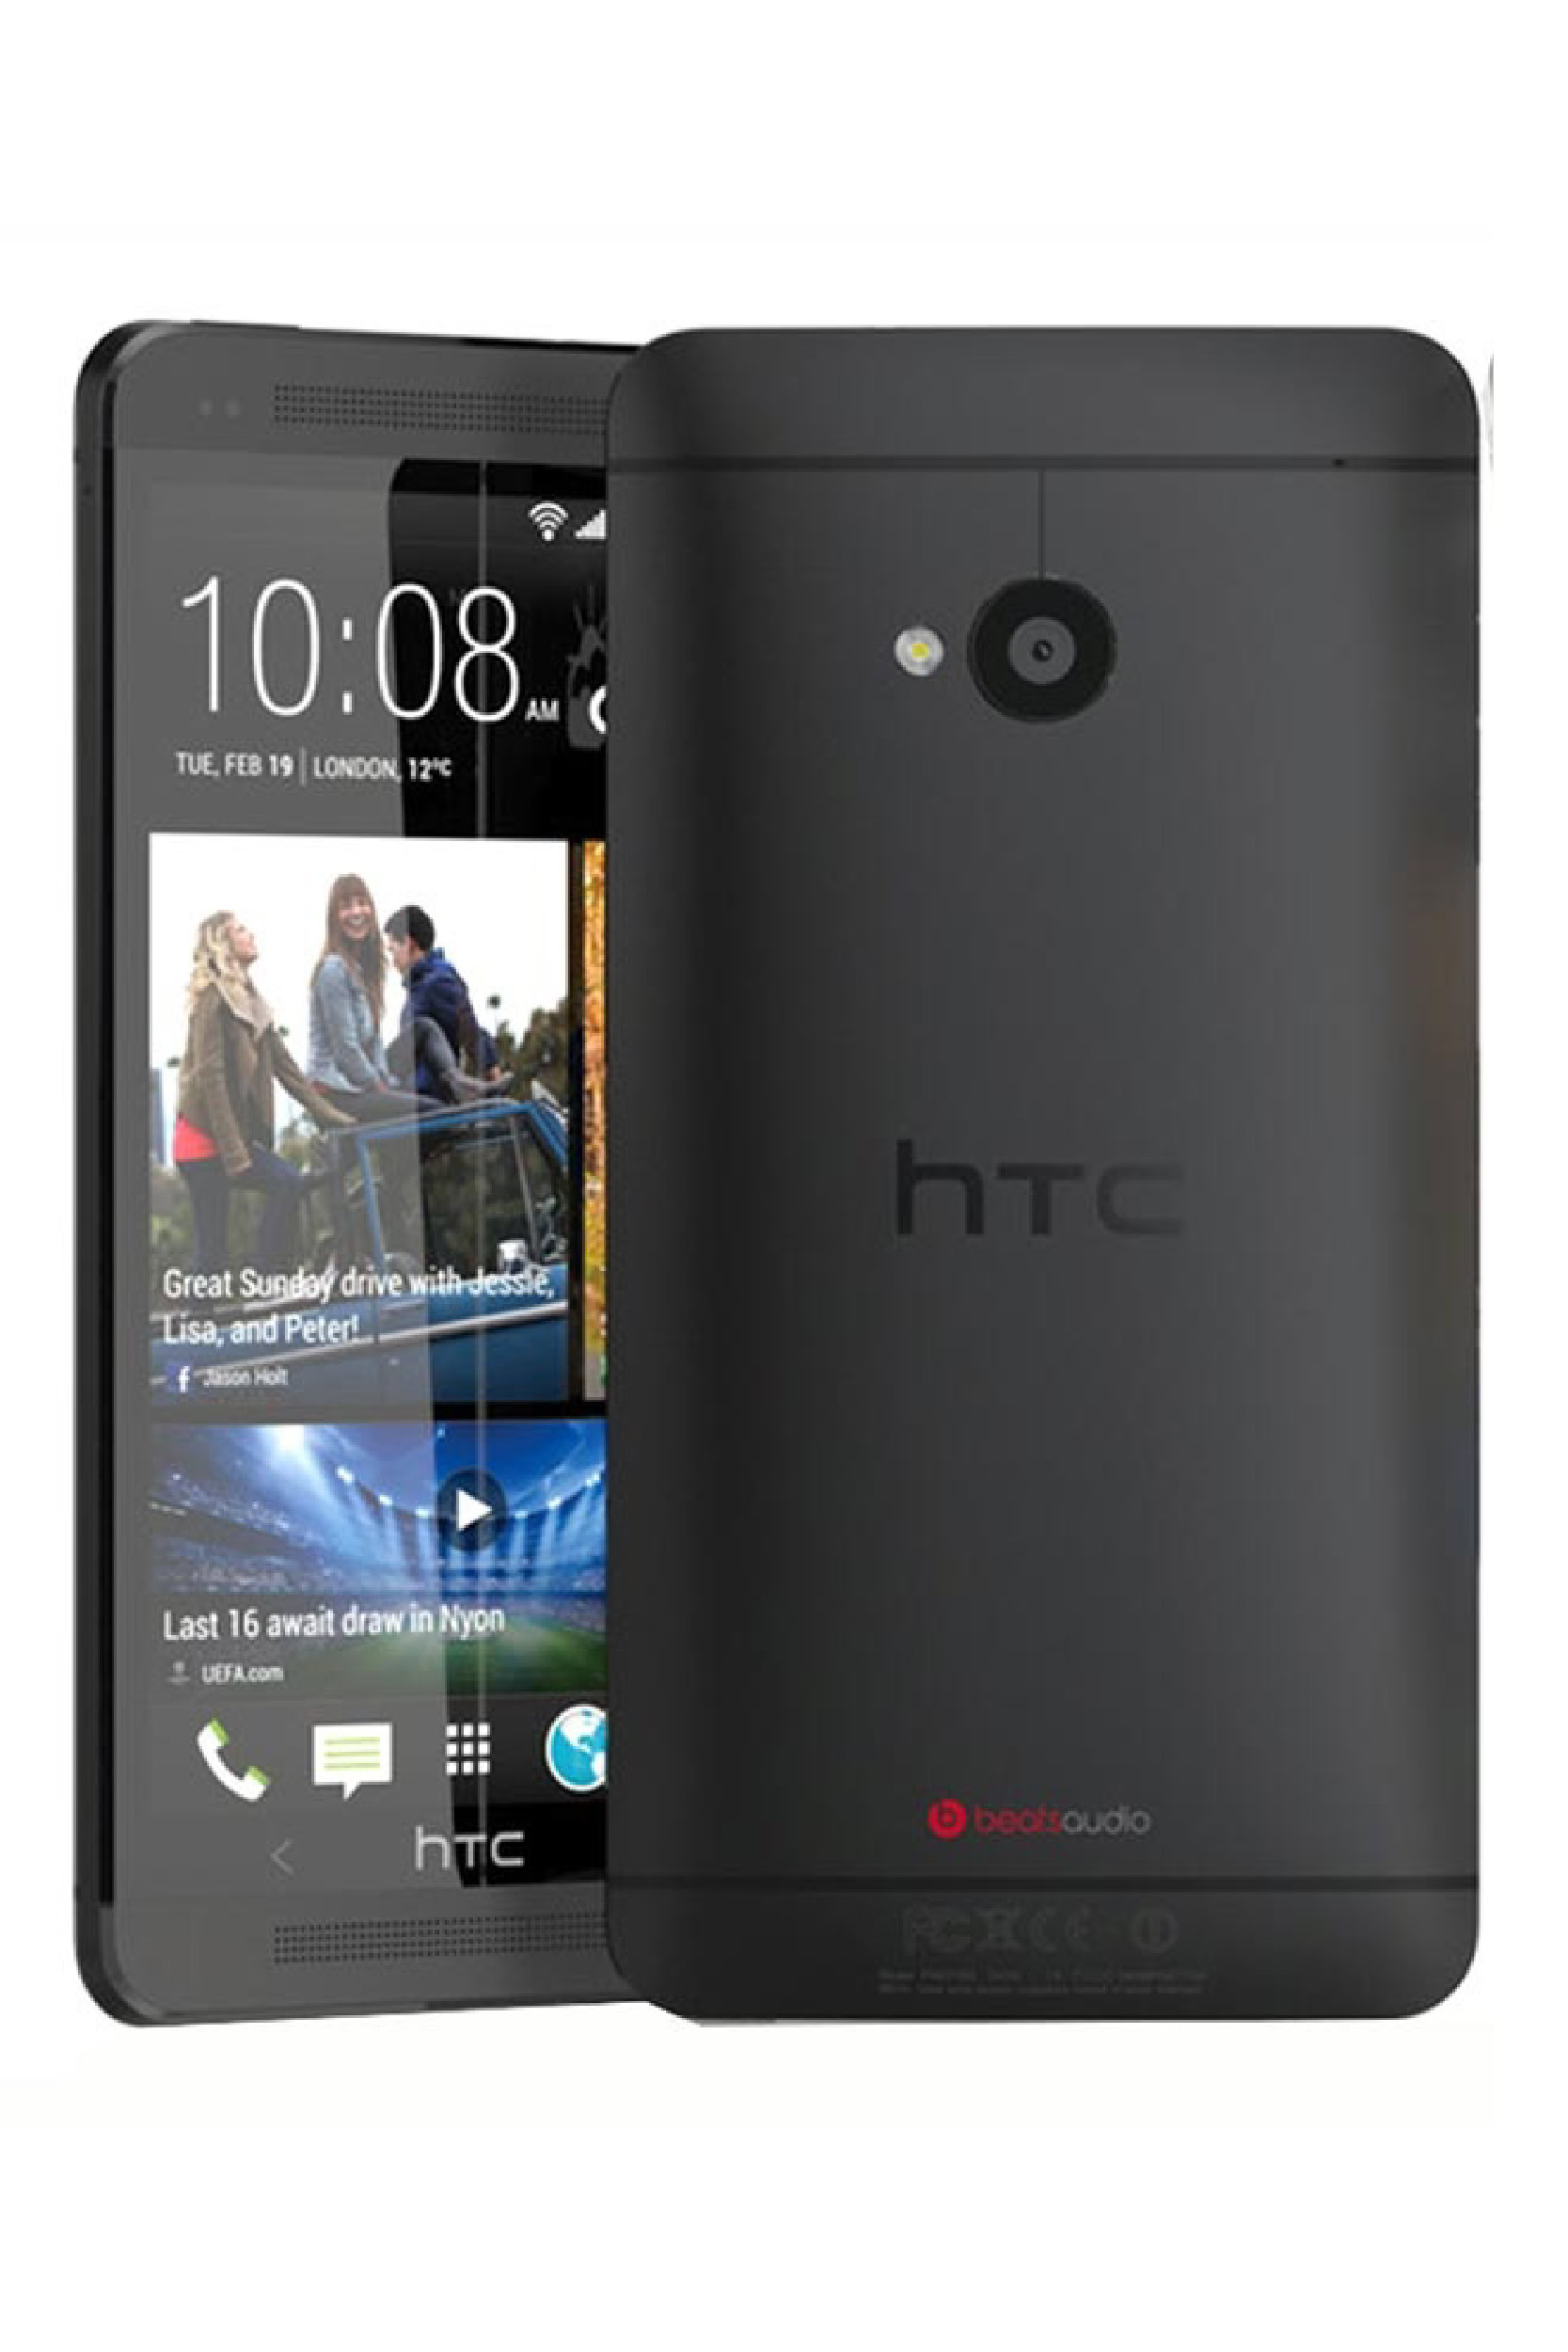 HTC M7 Price in Pak   istan & Specs: Daily Updated | ProPakistani